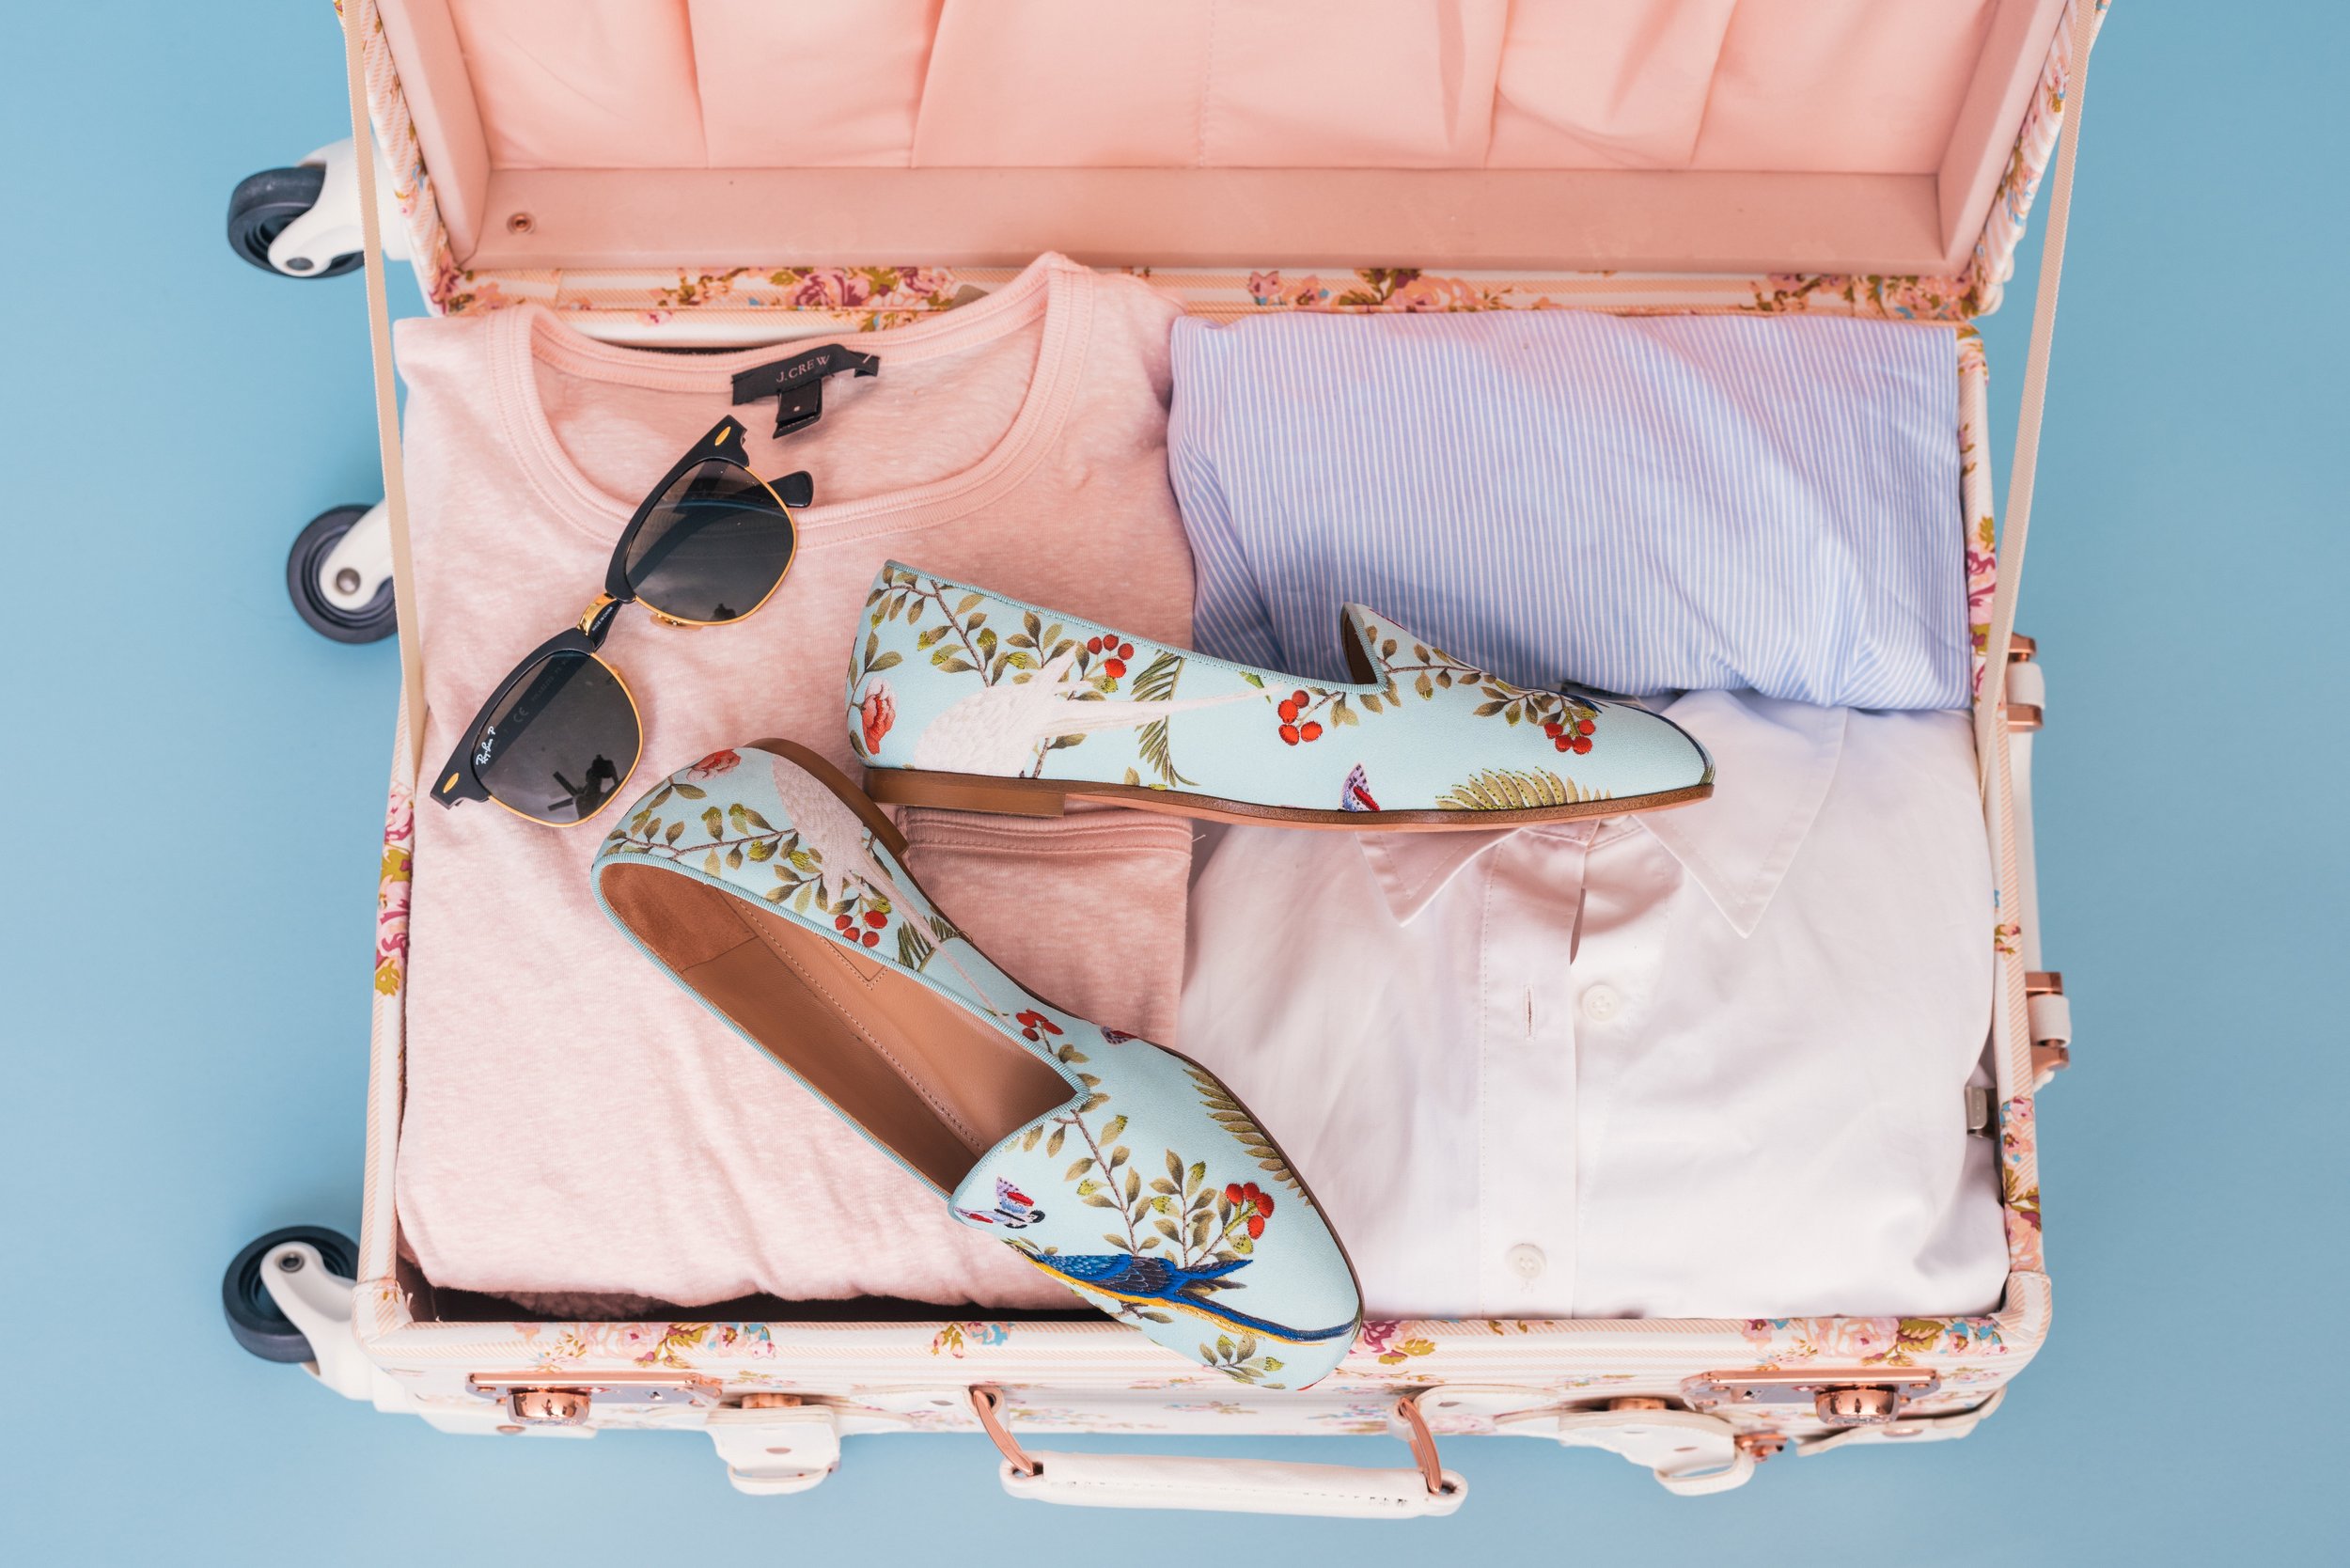 arnel-hasanovic-suitcase-ArtsyChowRoamer.jpg